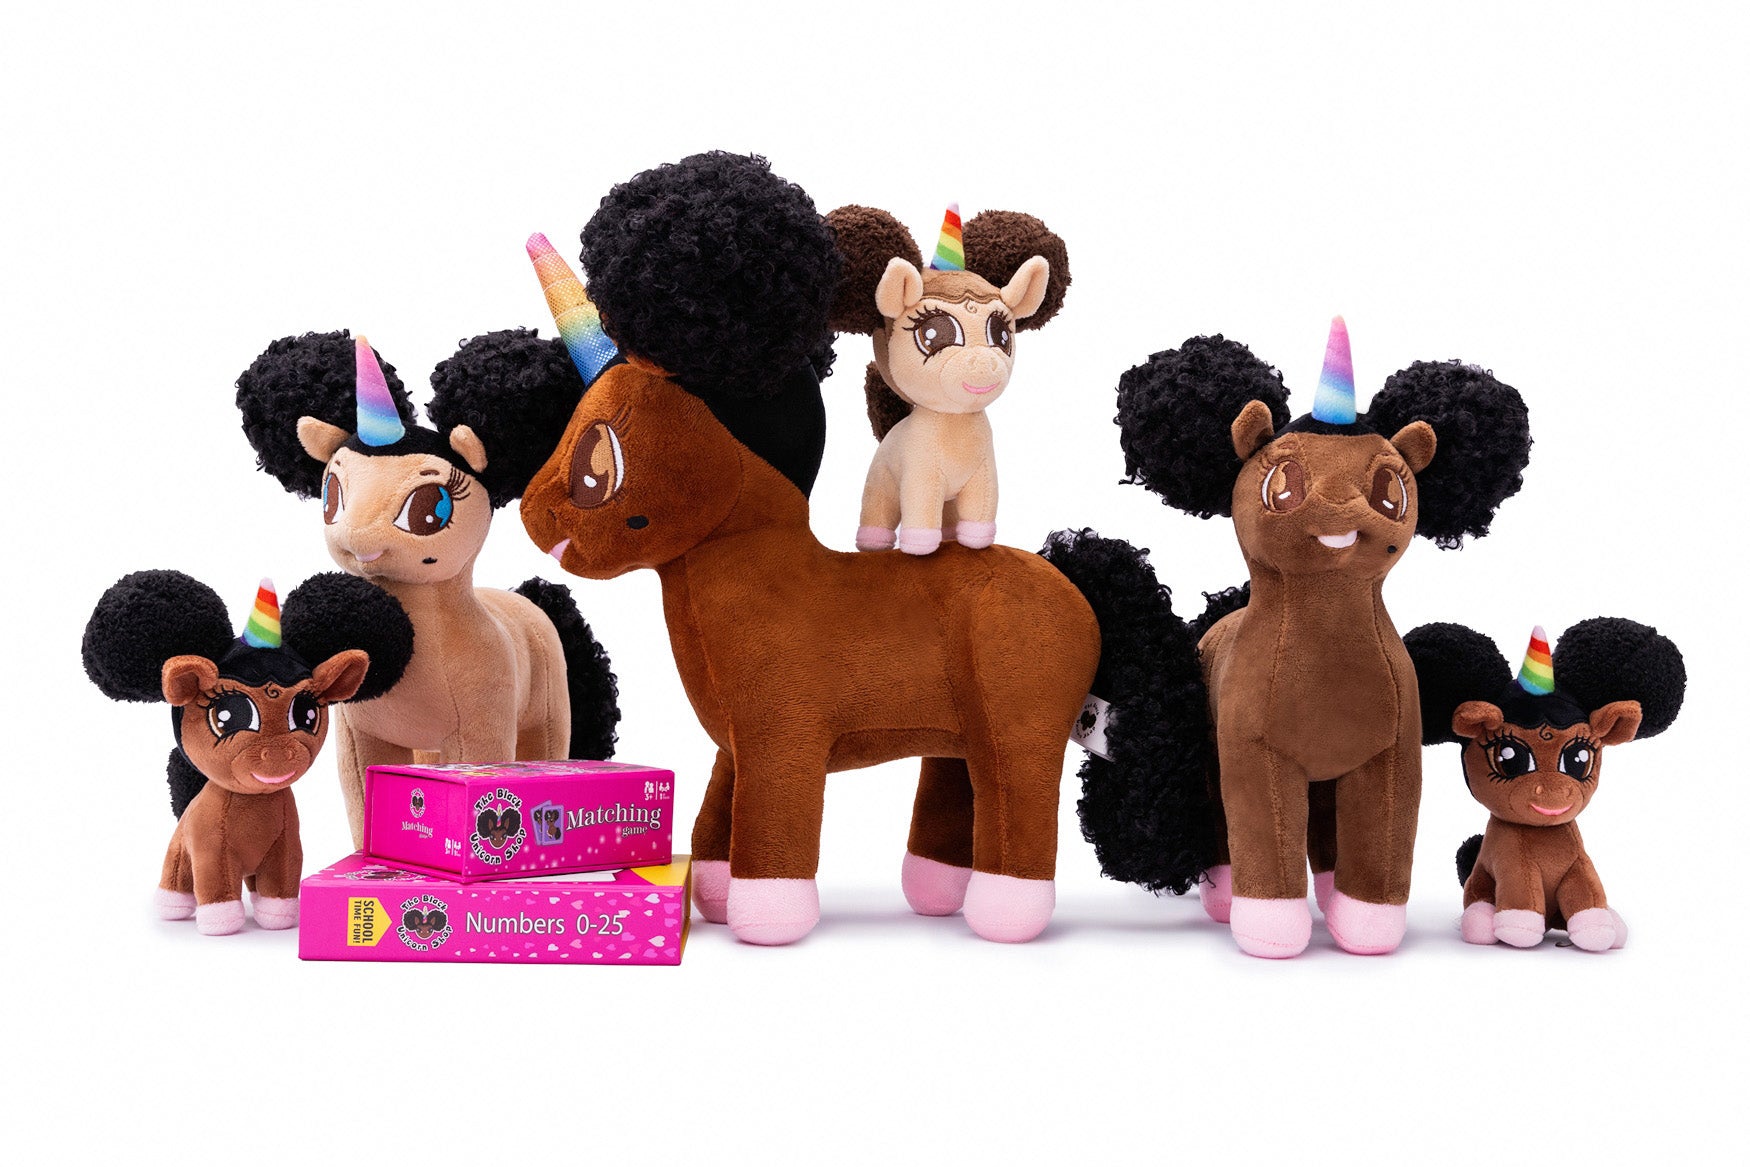 Black Unicorn Plush Toys Dolls Games